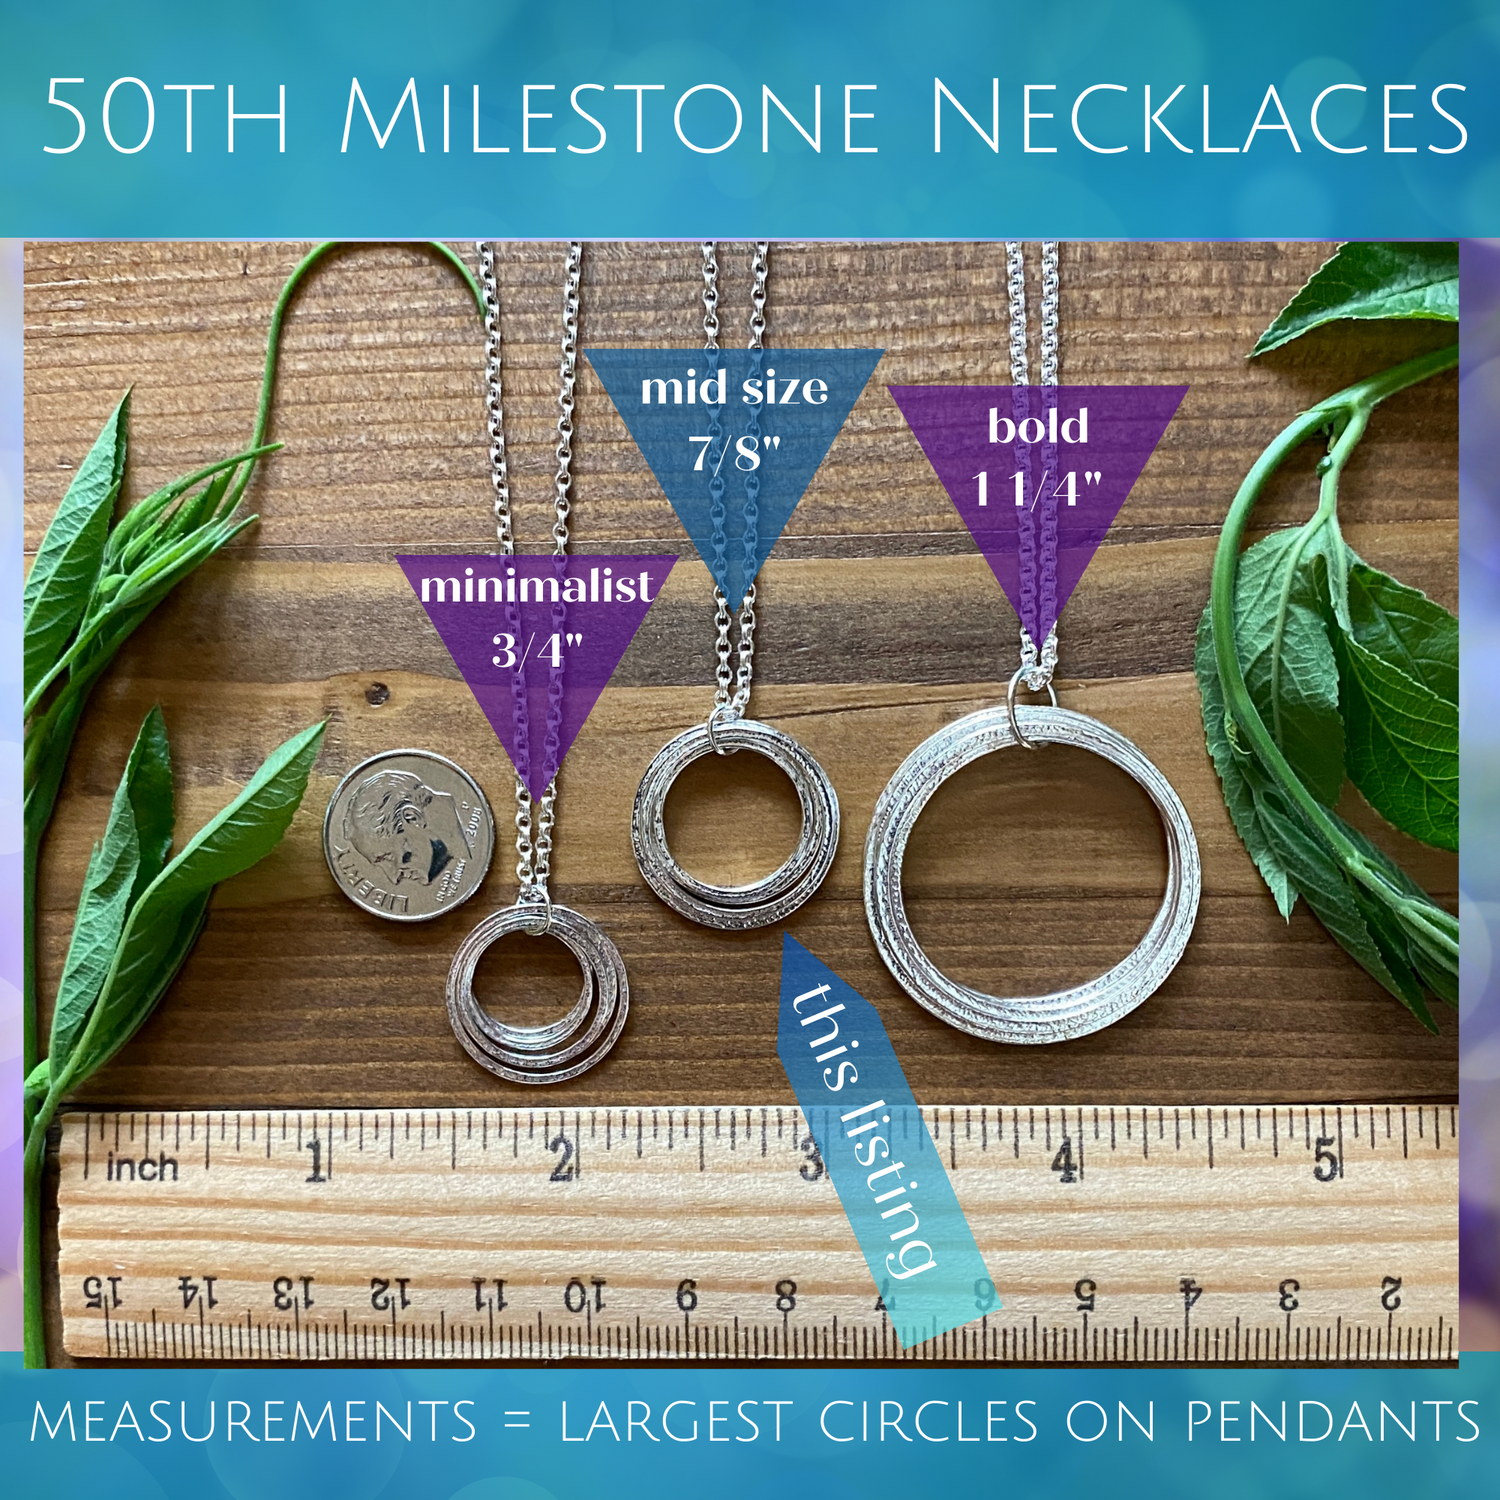 Mid Size Milestone Necklace from Amy Friend Jewelry